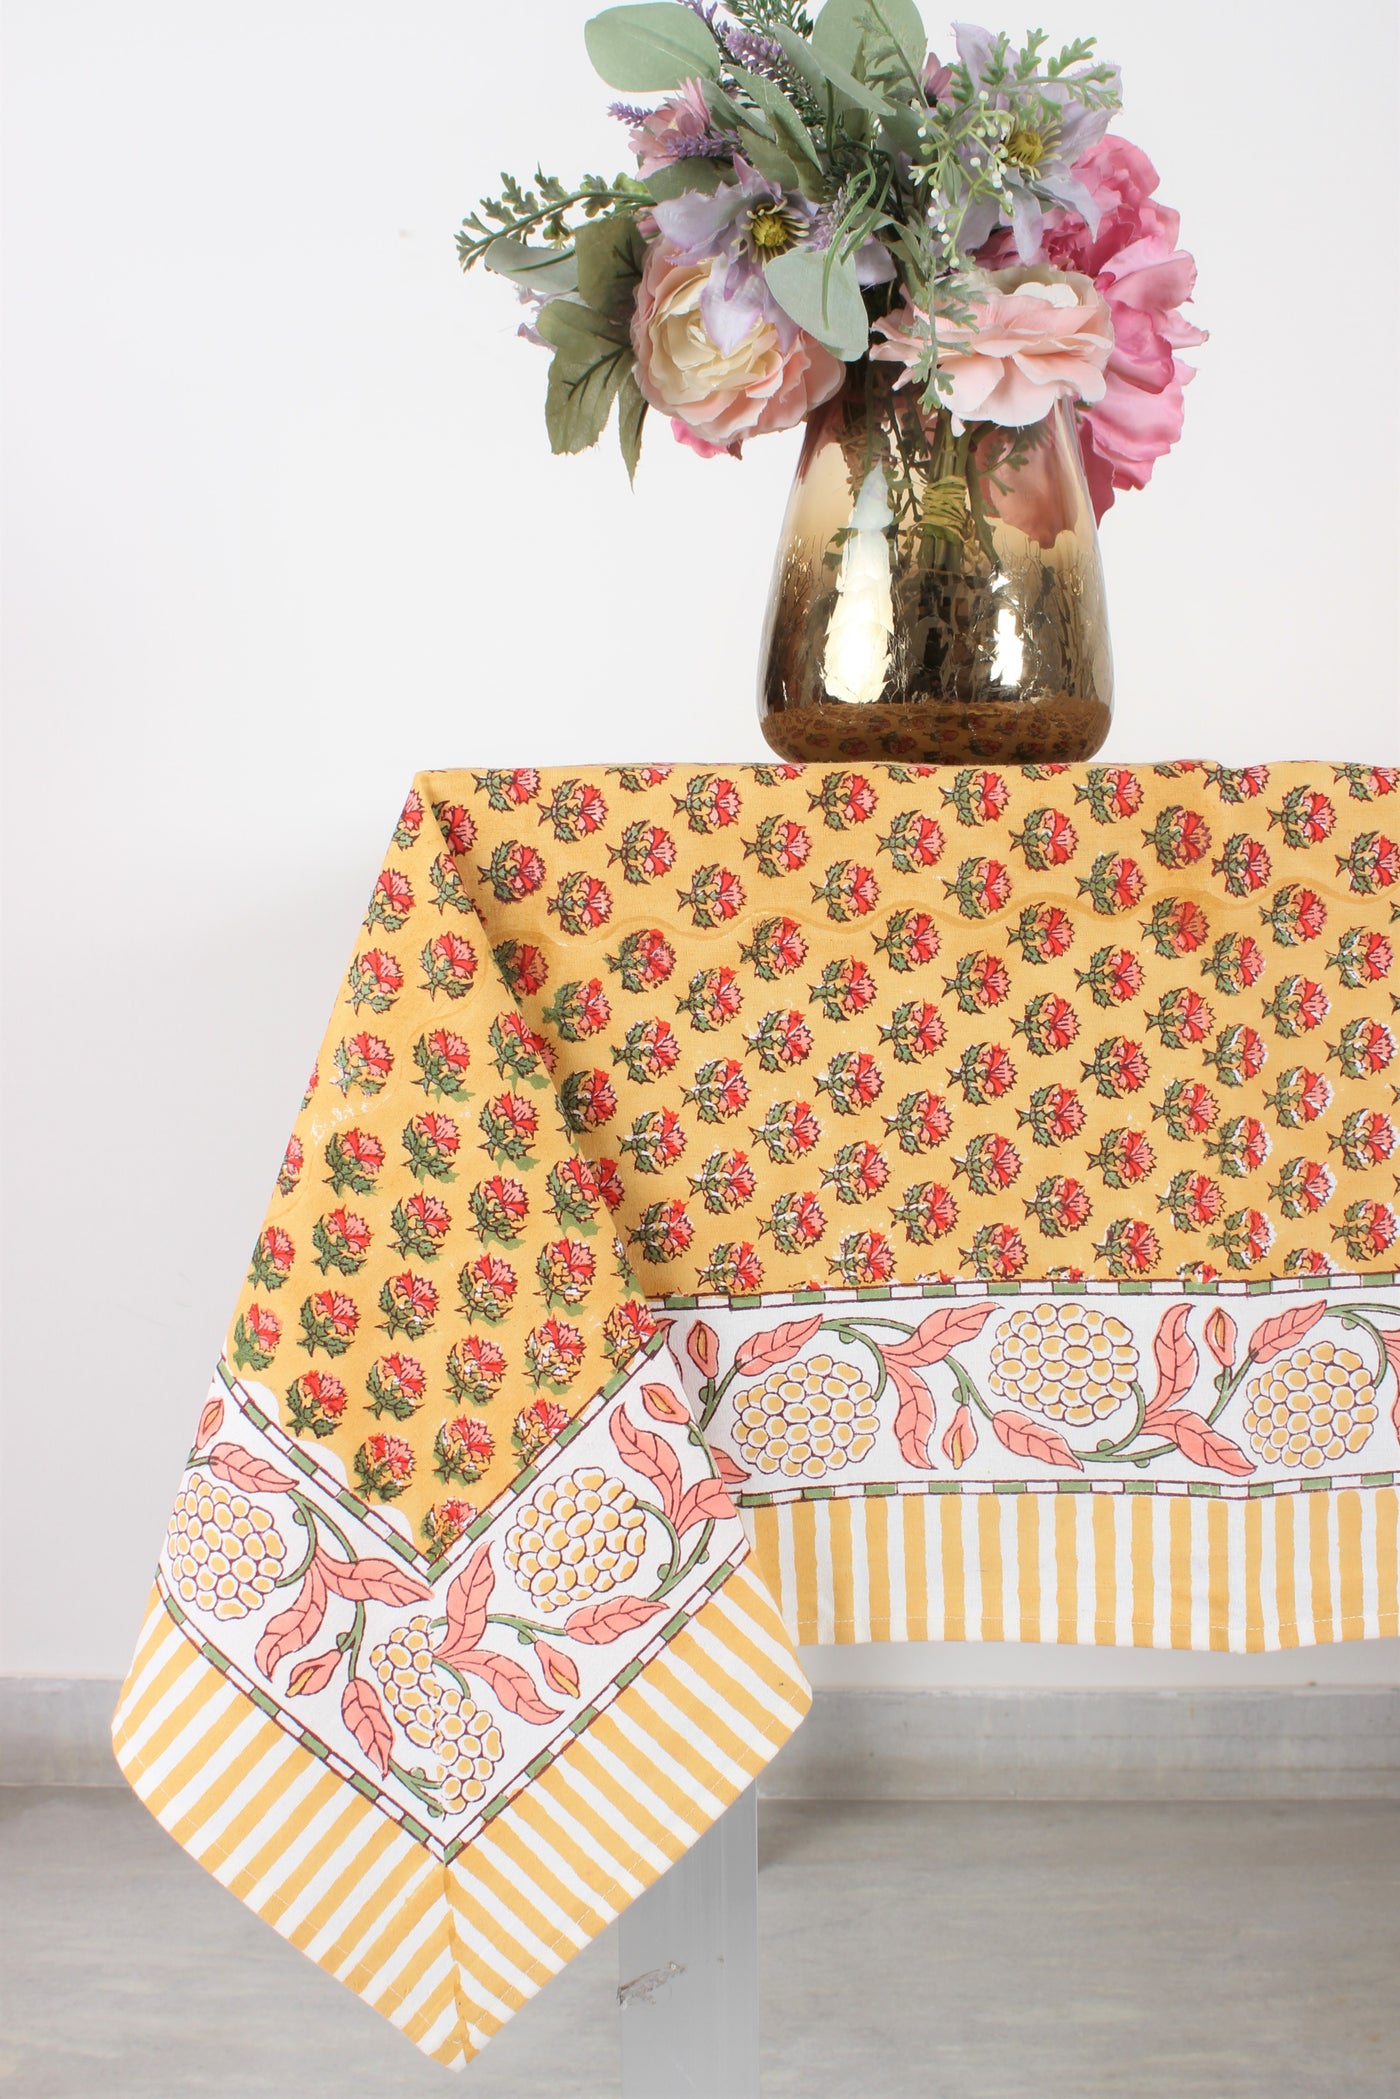 Fibricrush Yellow Indian Hand Block Printed Cotton Cloth Tablecloth, Table Covers, Fall Decor Table Linen, Wedding Farmhouse Home Party Picnic